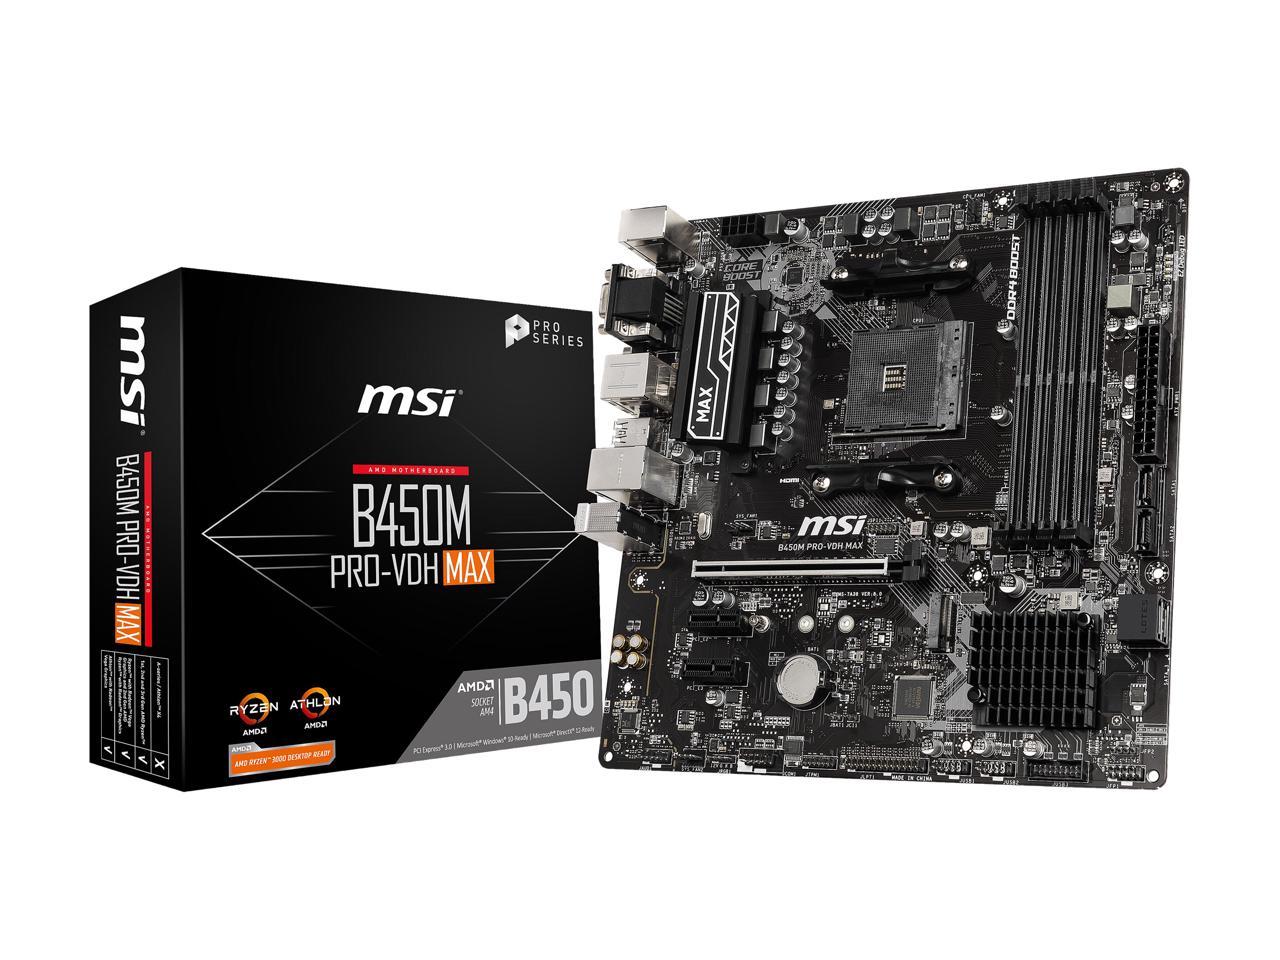 Msi Pro B450M Pro-Vdh Max Am4 Amd B450 Sata 6Gb/S Micro Atx Amd Motherboard